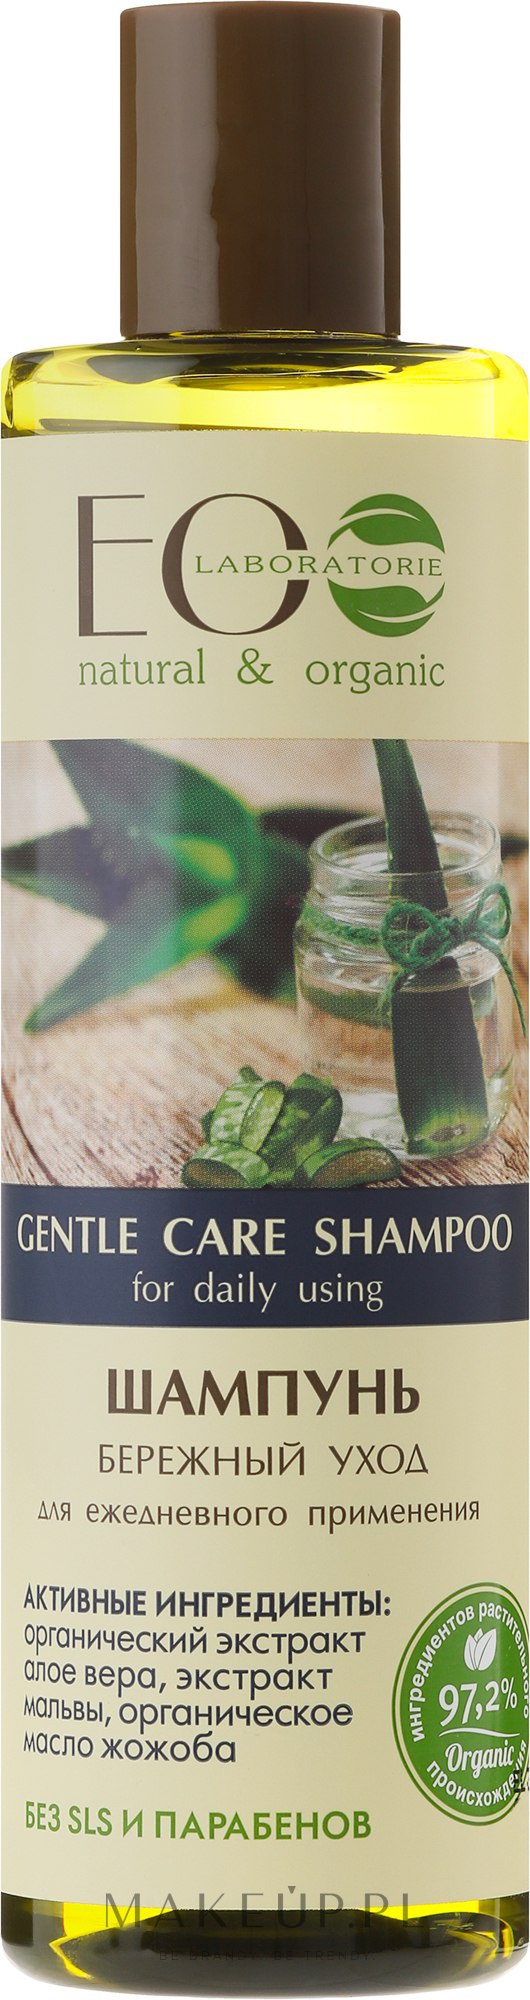 ECO Laboratorie Gentle Care Shampoo